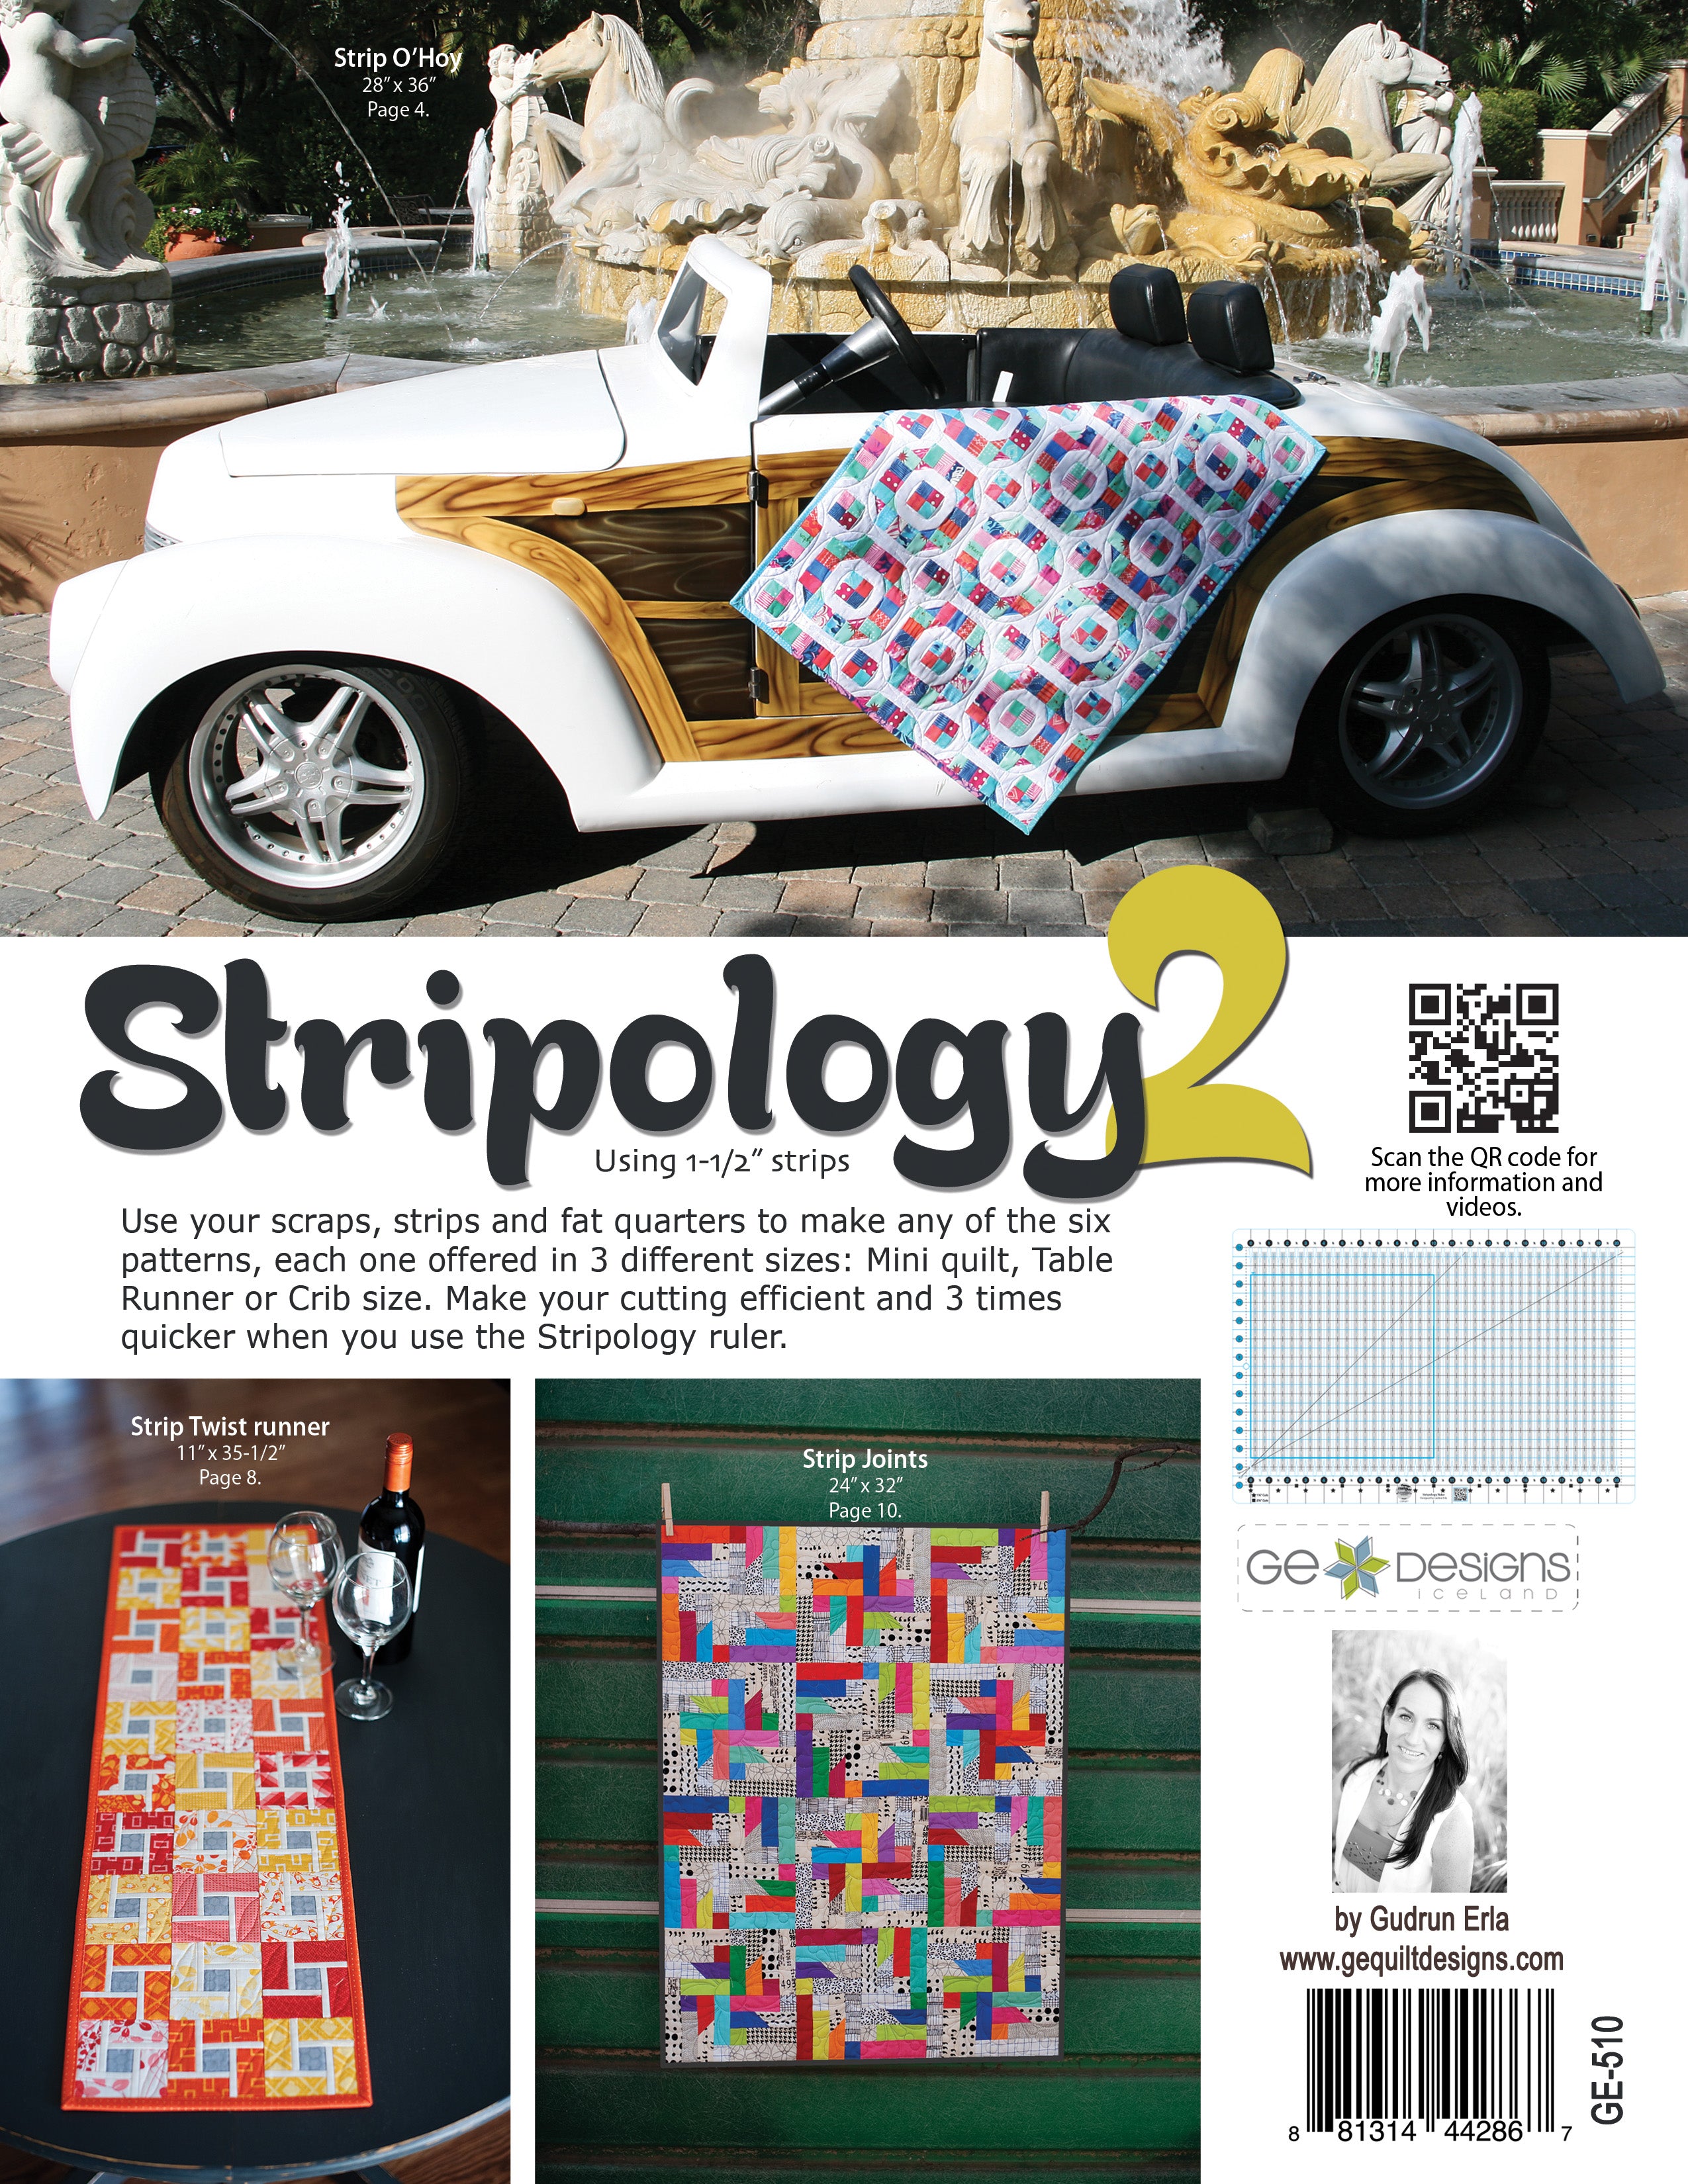 GE Designs Stripology Mixology 2 Book